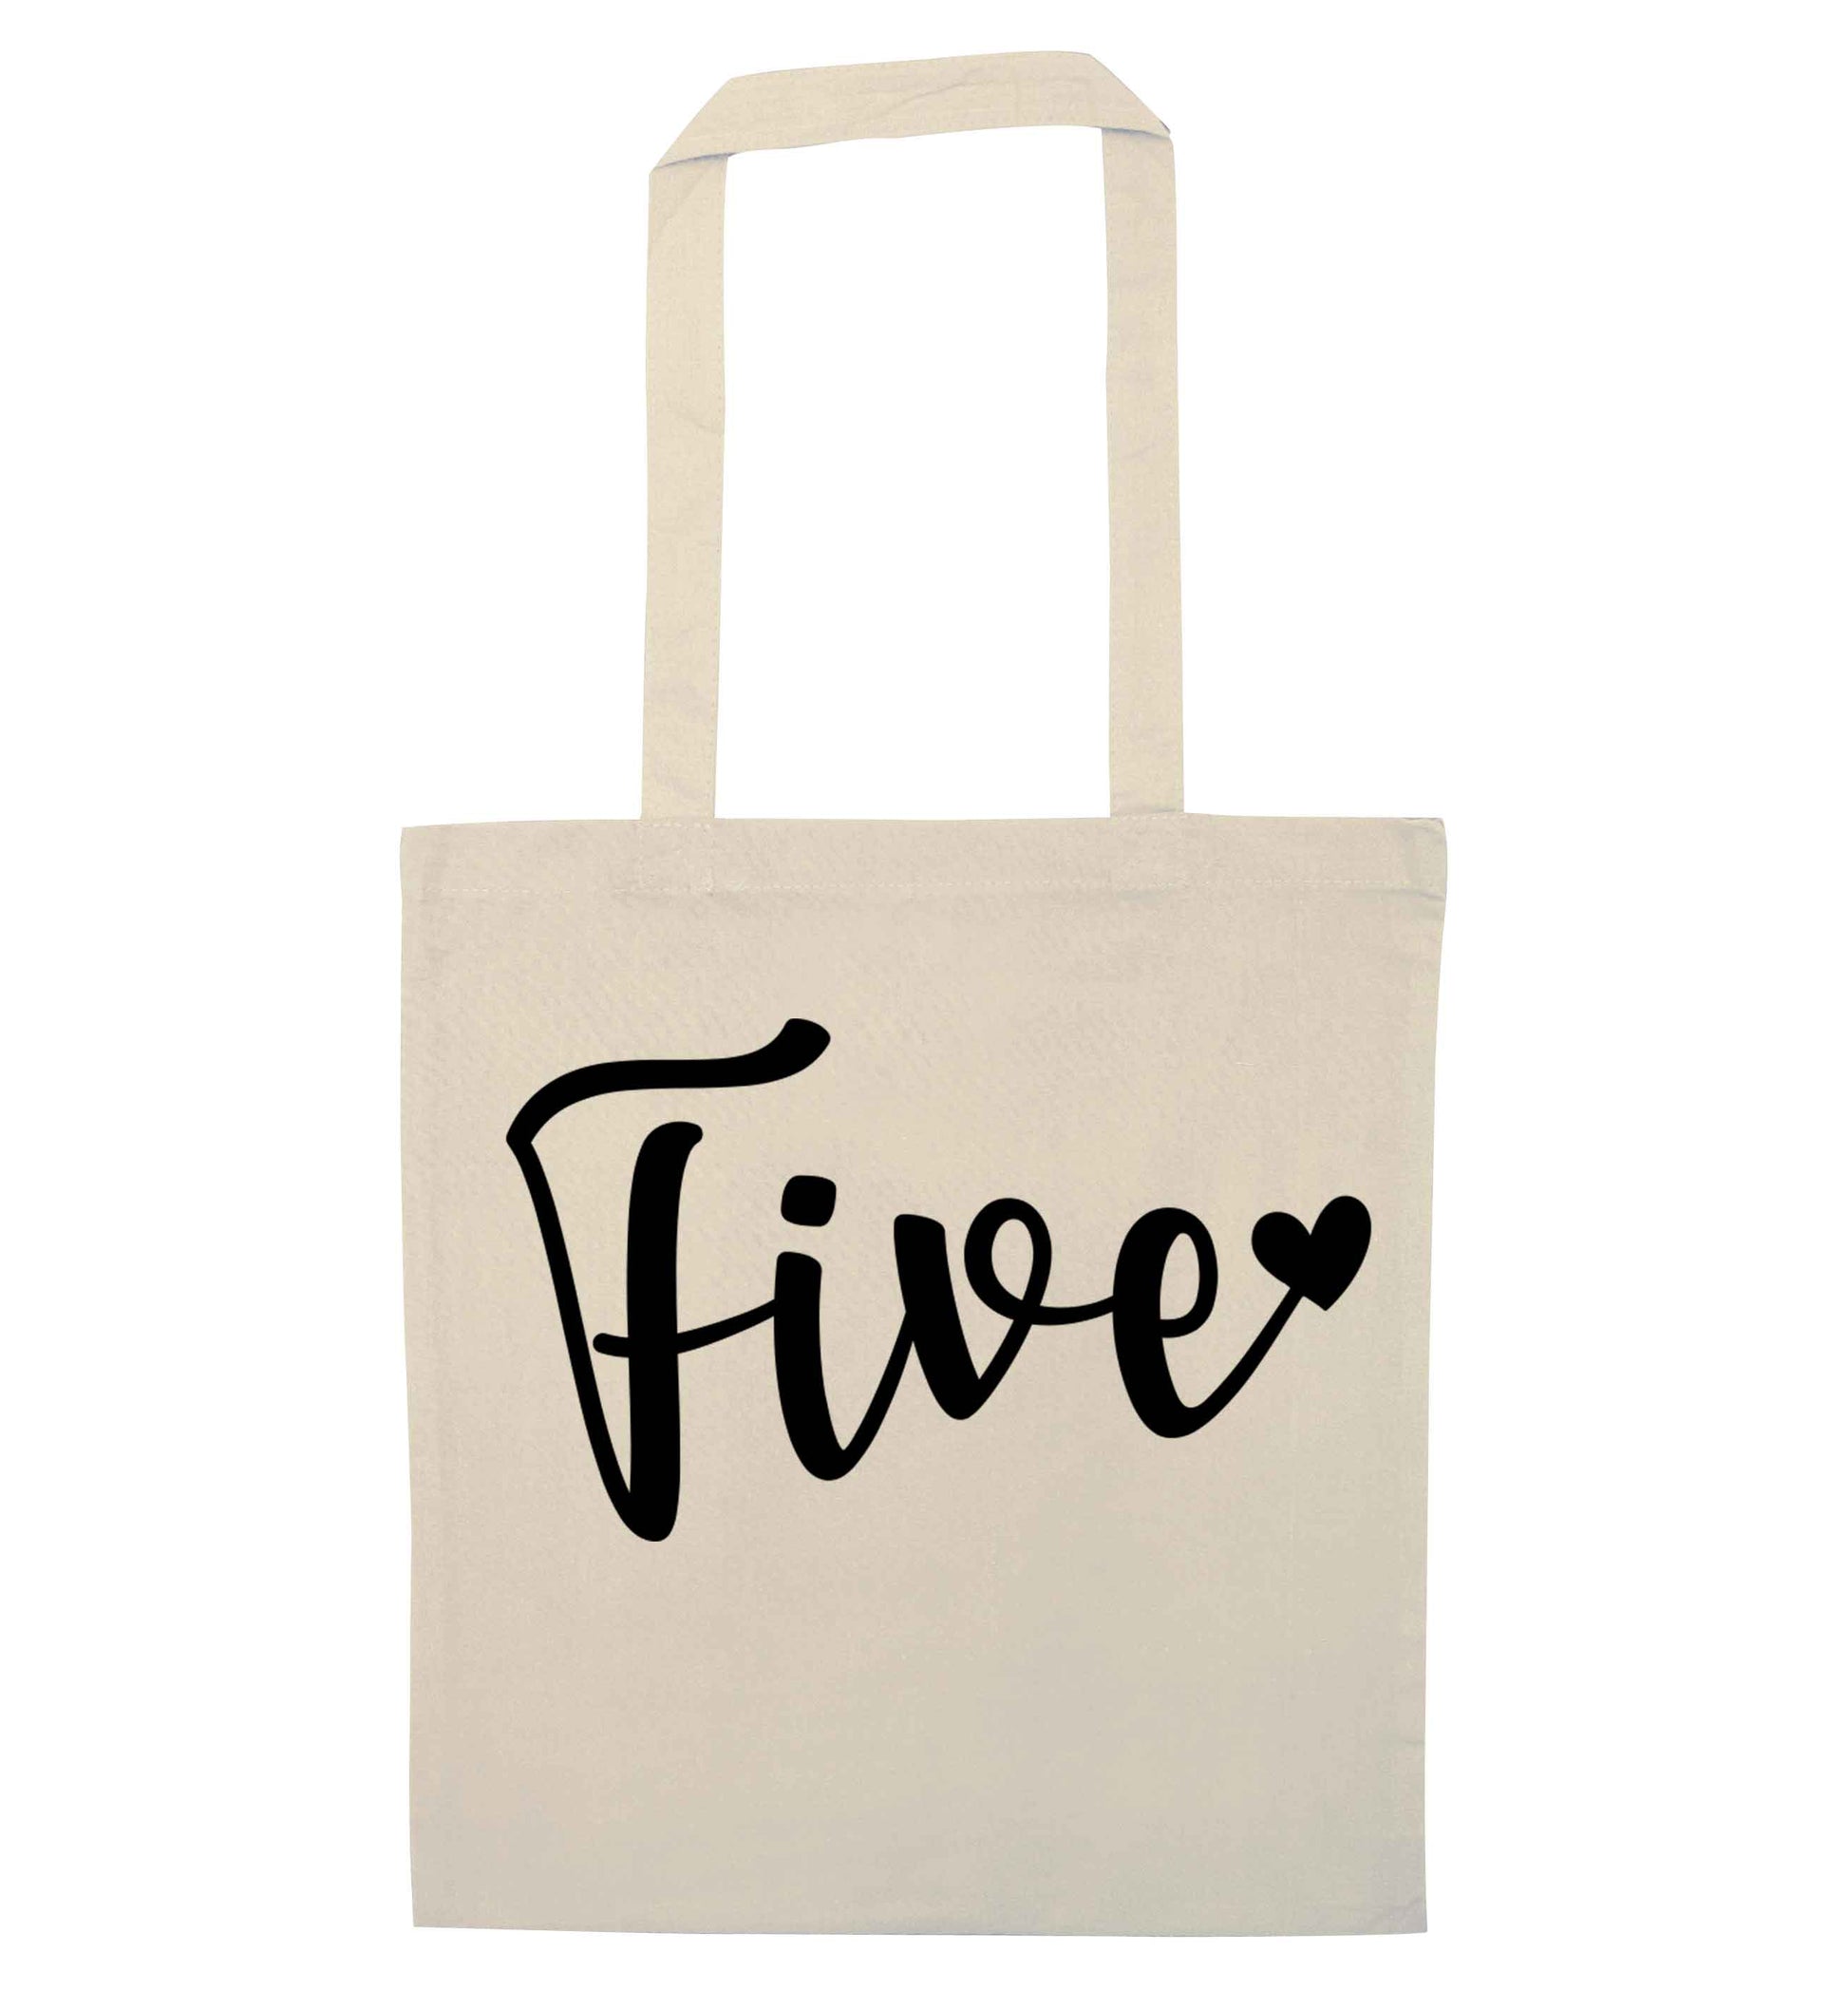 Five and heart natural tote bag